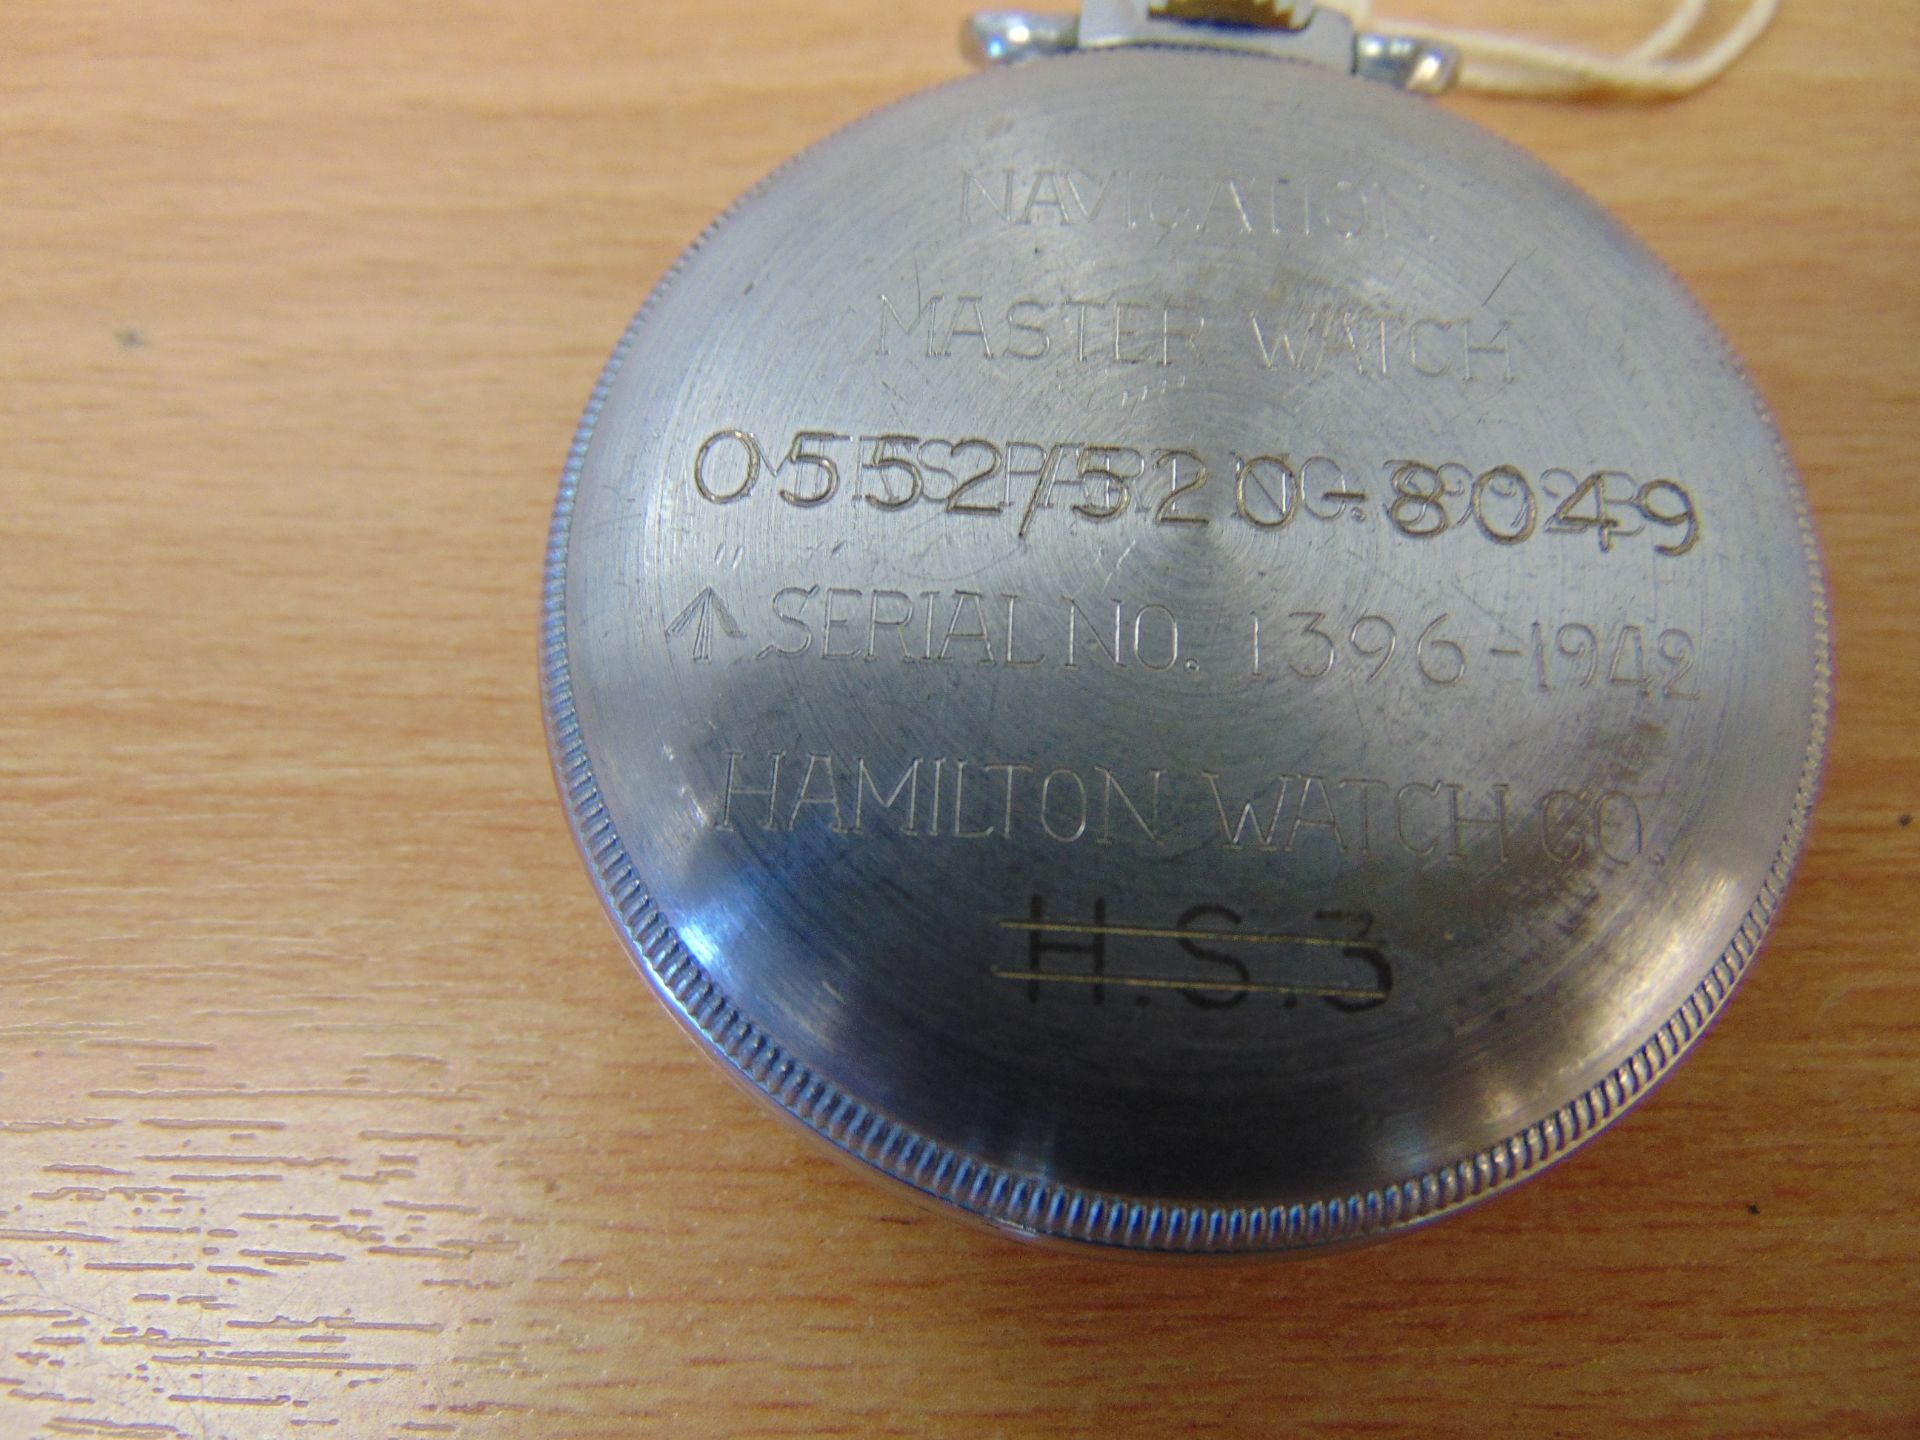 V.Rare Hamilton 22 Jewels Master Navigator Watch Marked US Govt and 0552 Royal Navy - Image 5 of 7